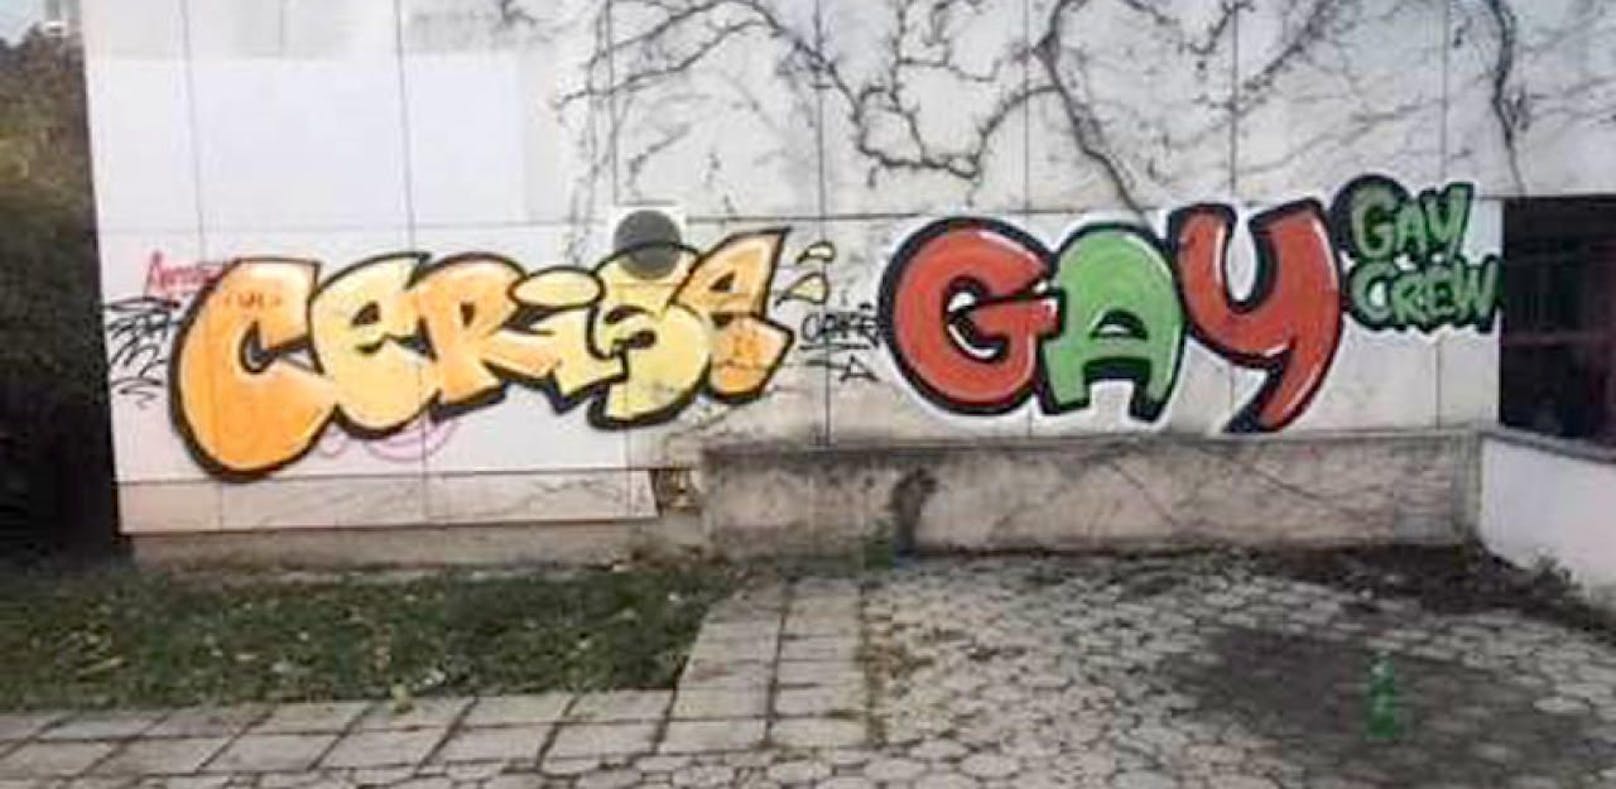 Schwere Sachbeschädigung durch Graffiti.